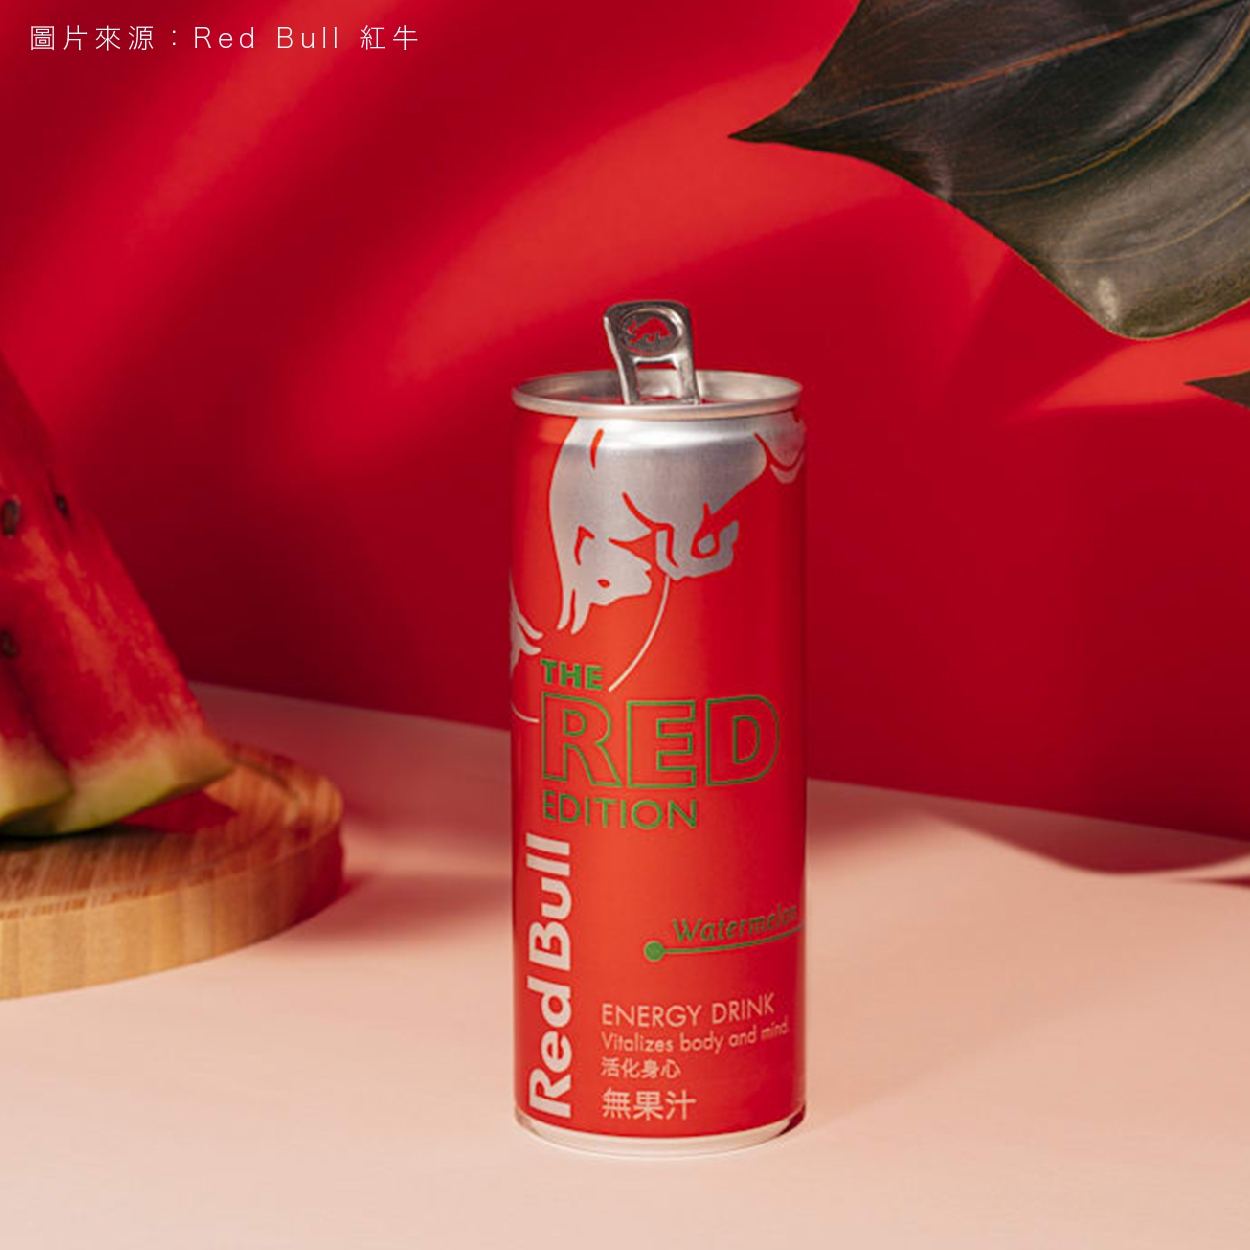 Red Bull 紅牛 西瓜風味能量飲料 給你的夏天一對翅膀